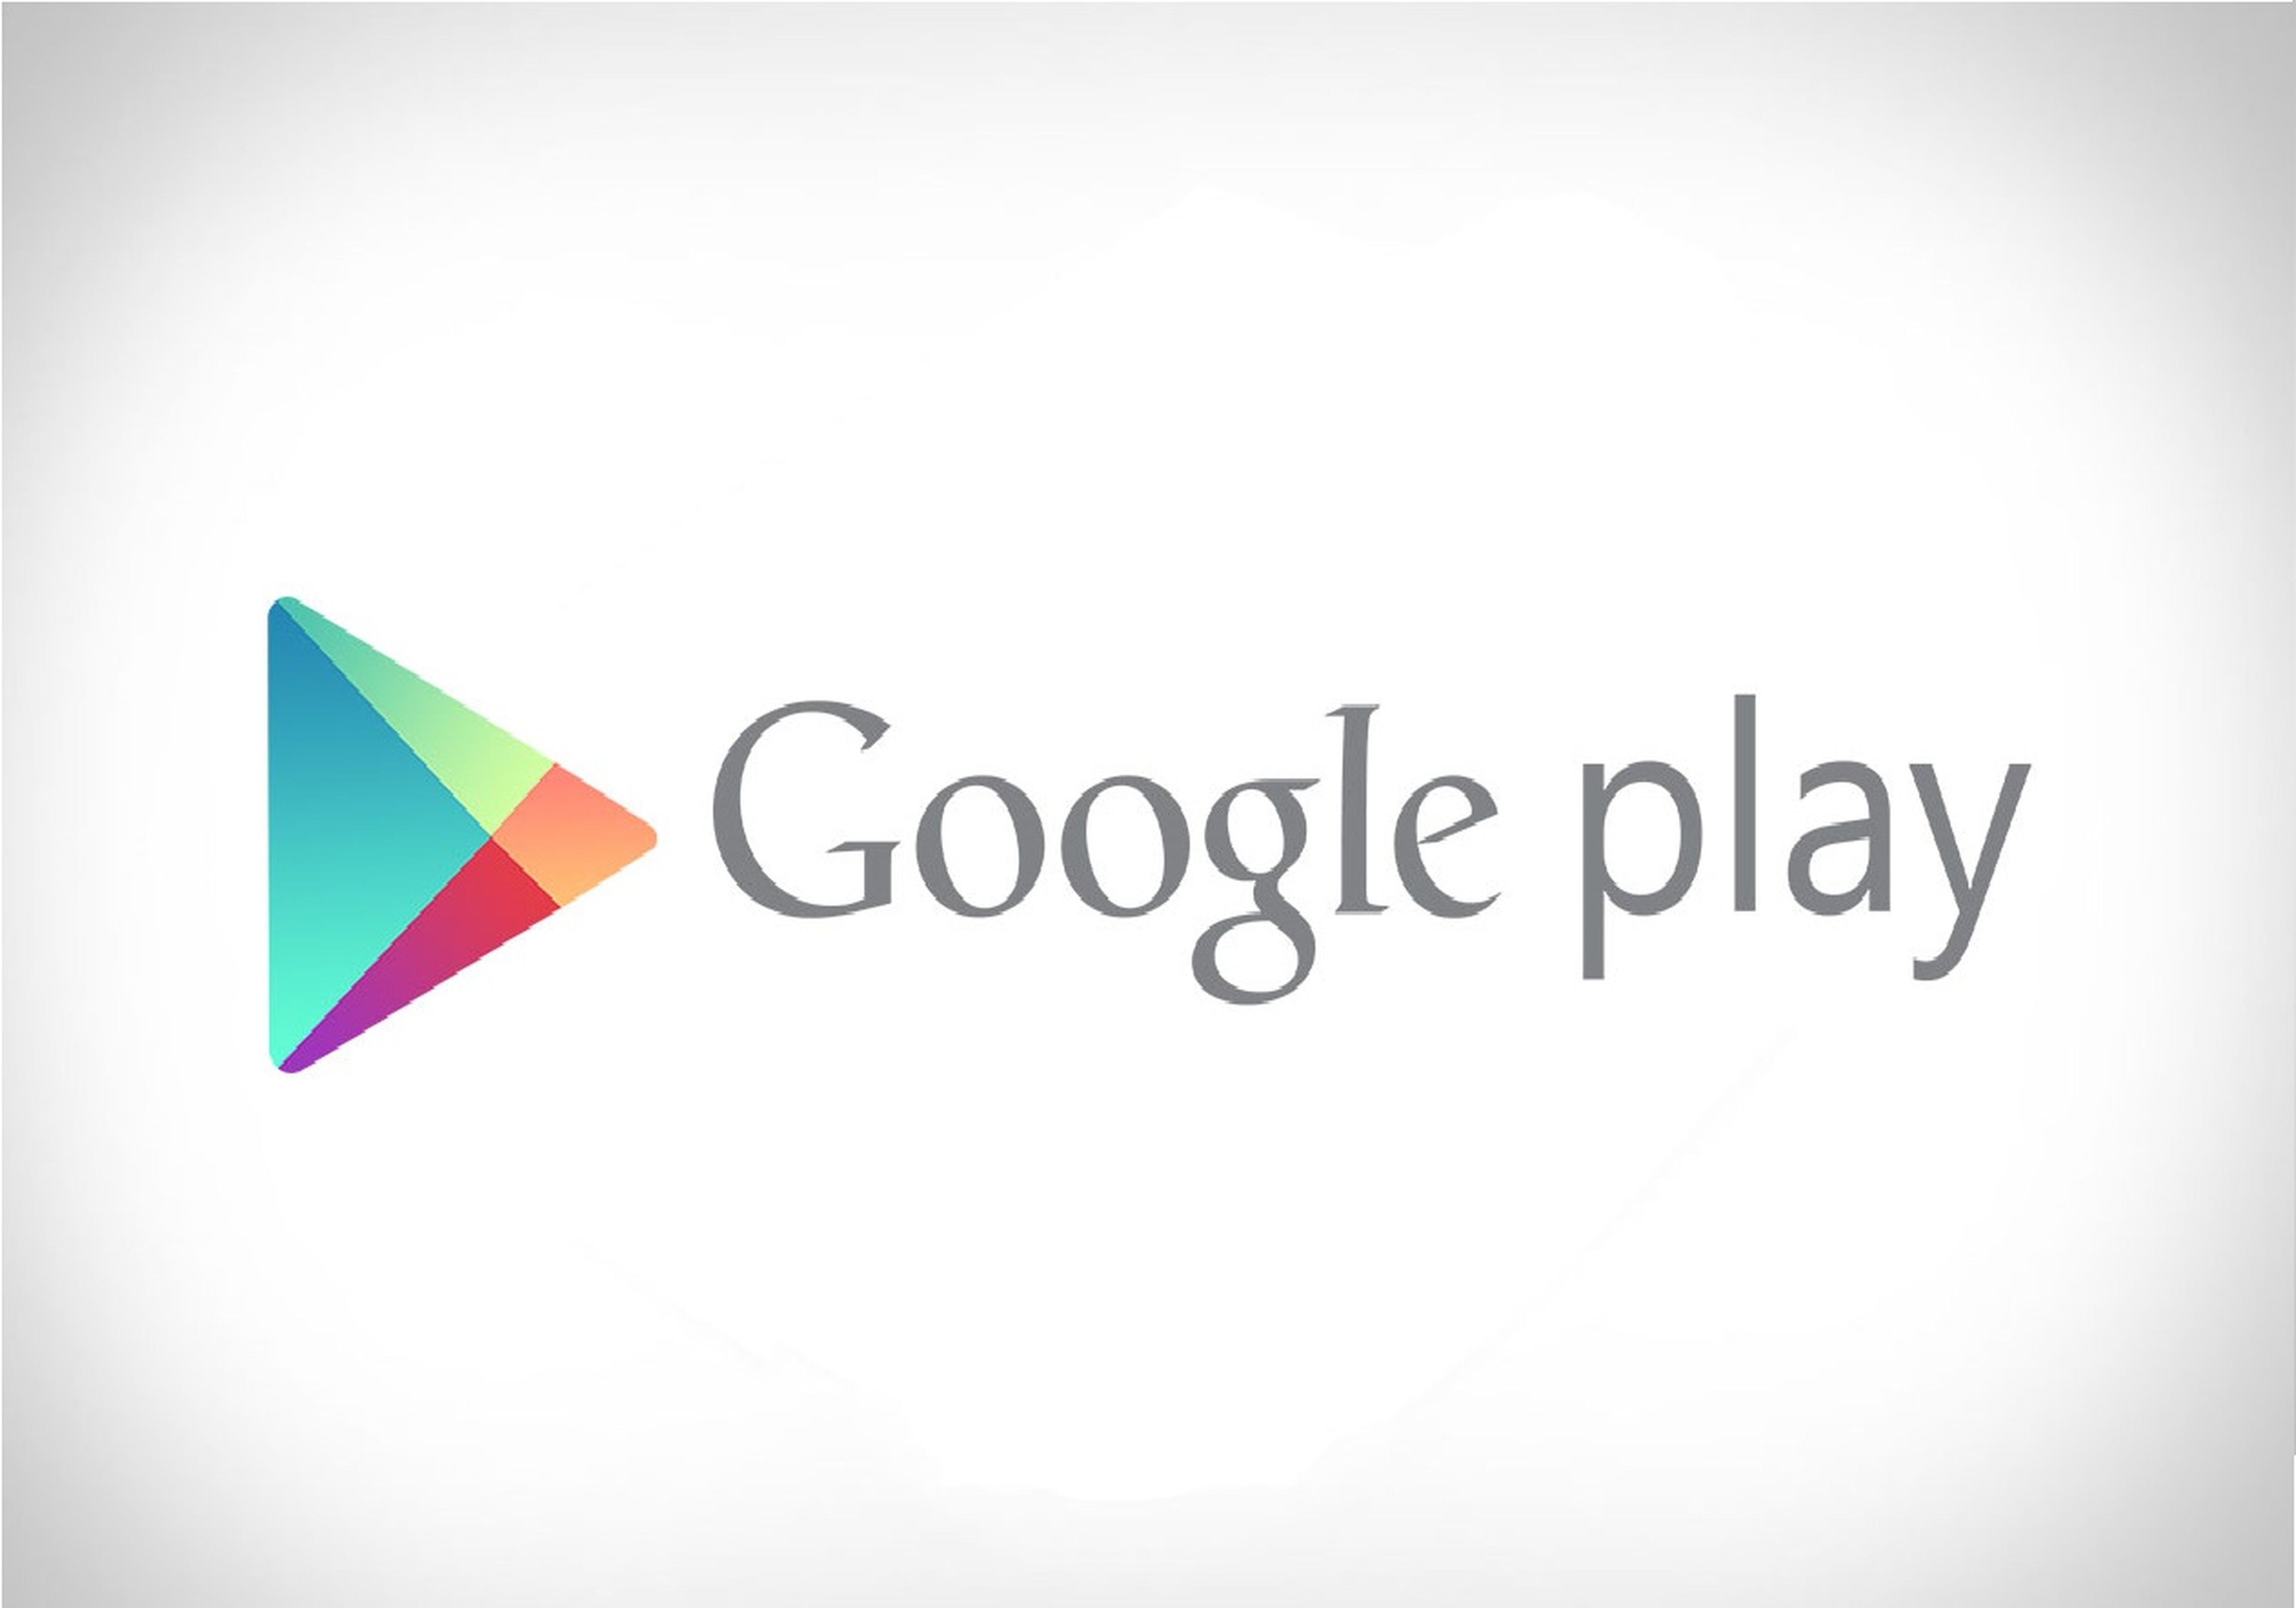 Google Play adelanta a Apple Store en cuanto a descargas